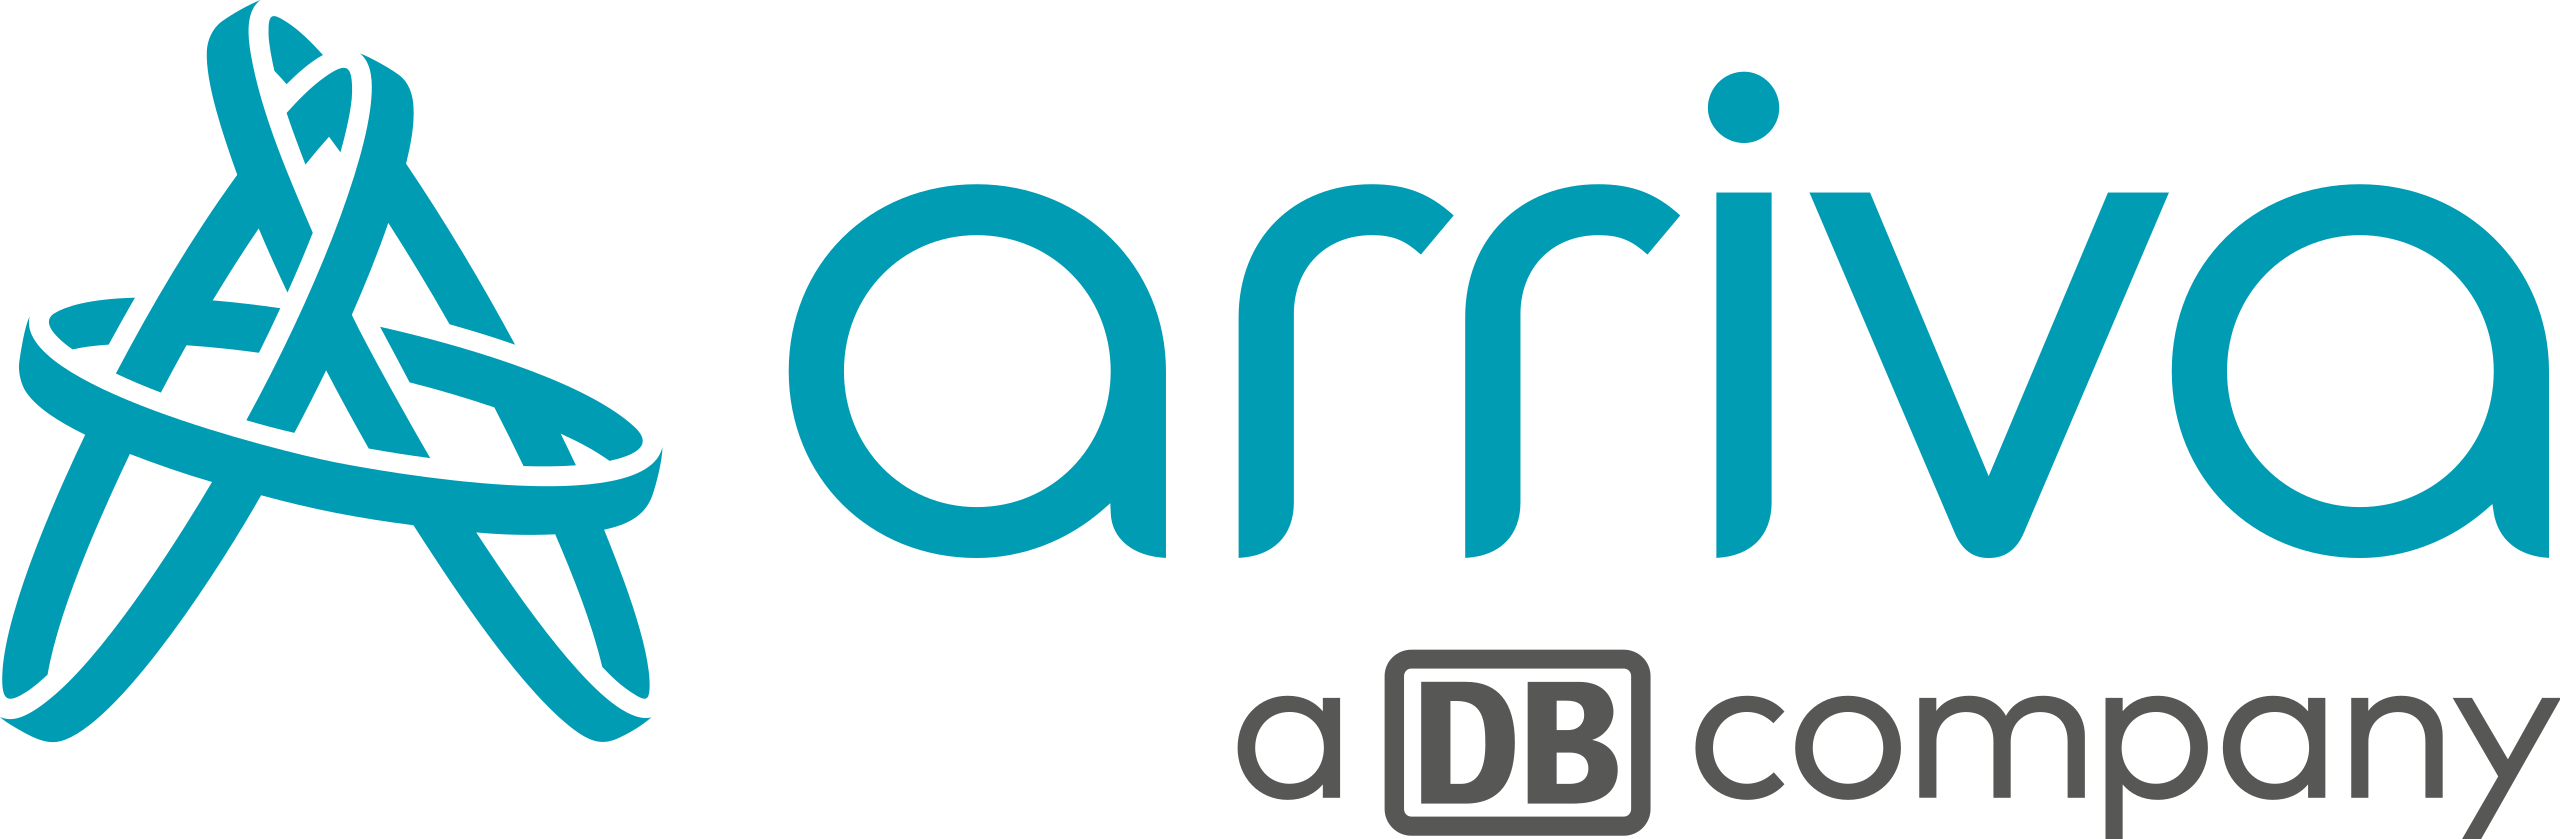 Arriva_DB_company_2017_logo.svg